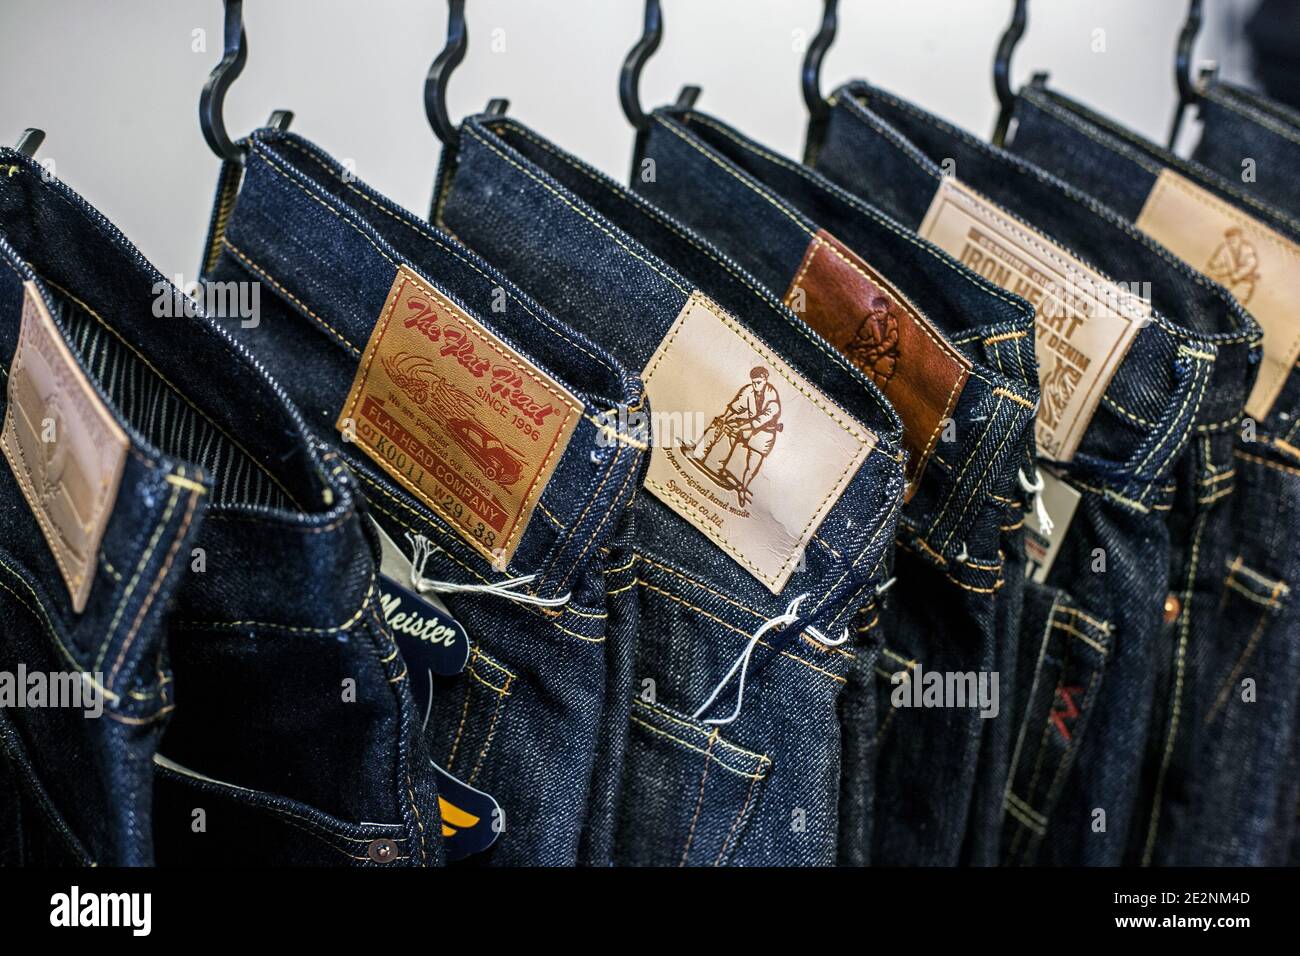 GREAT BRITAIN / England /London / Raw denim jeans Stock Photo